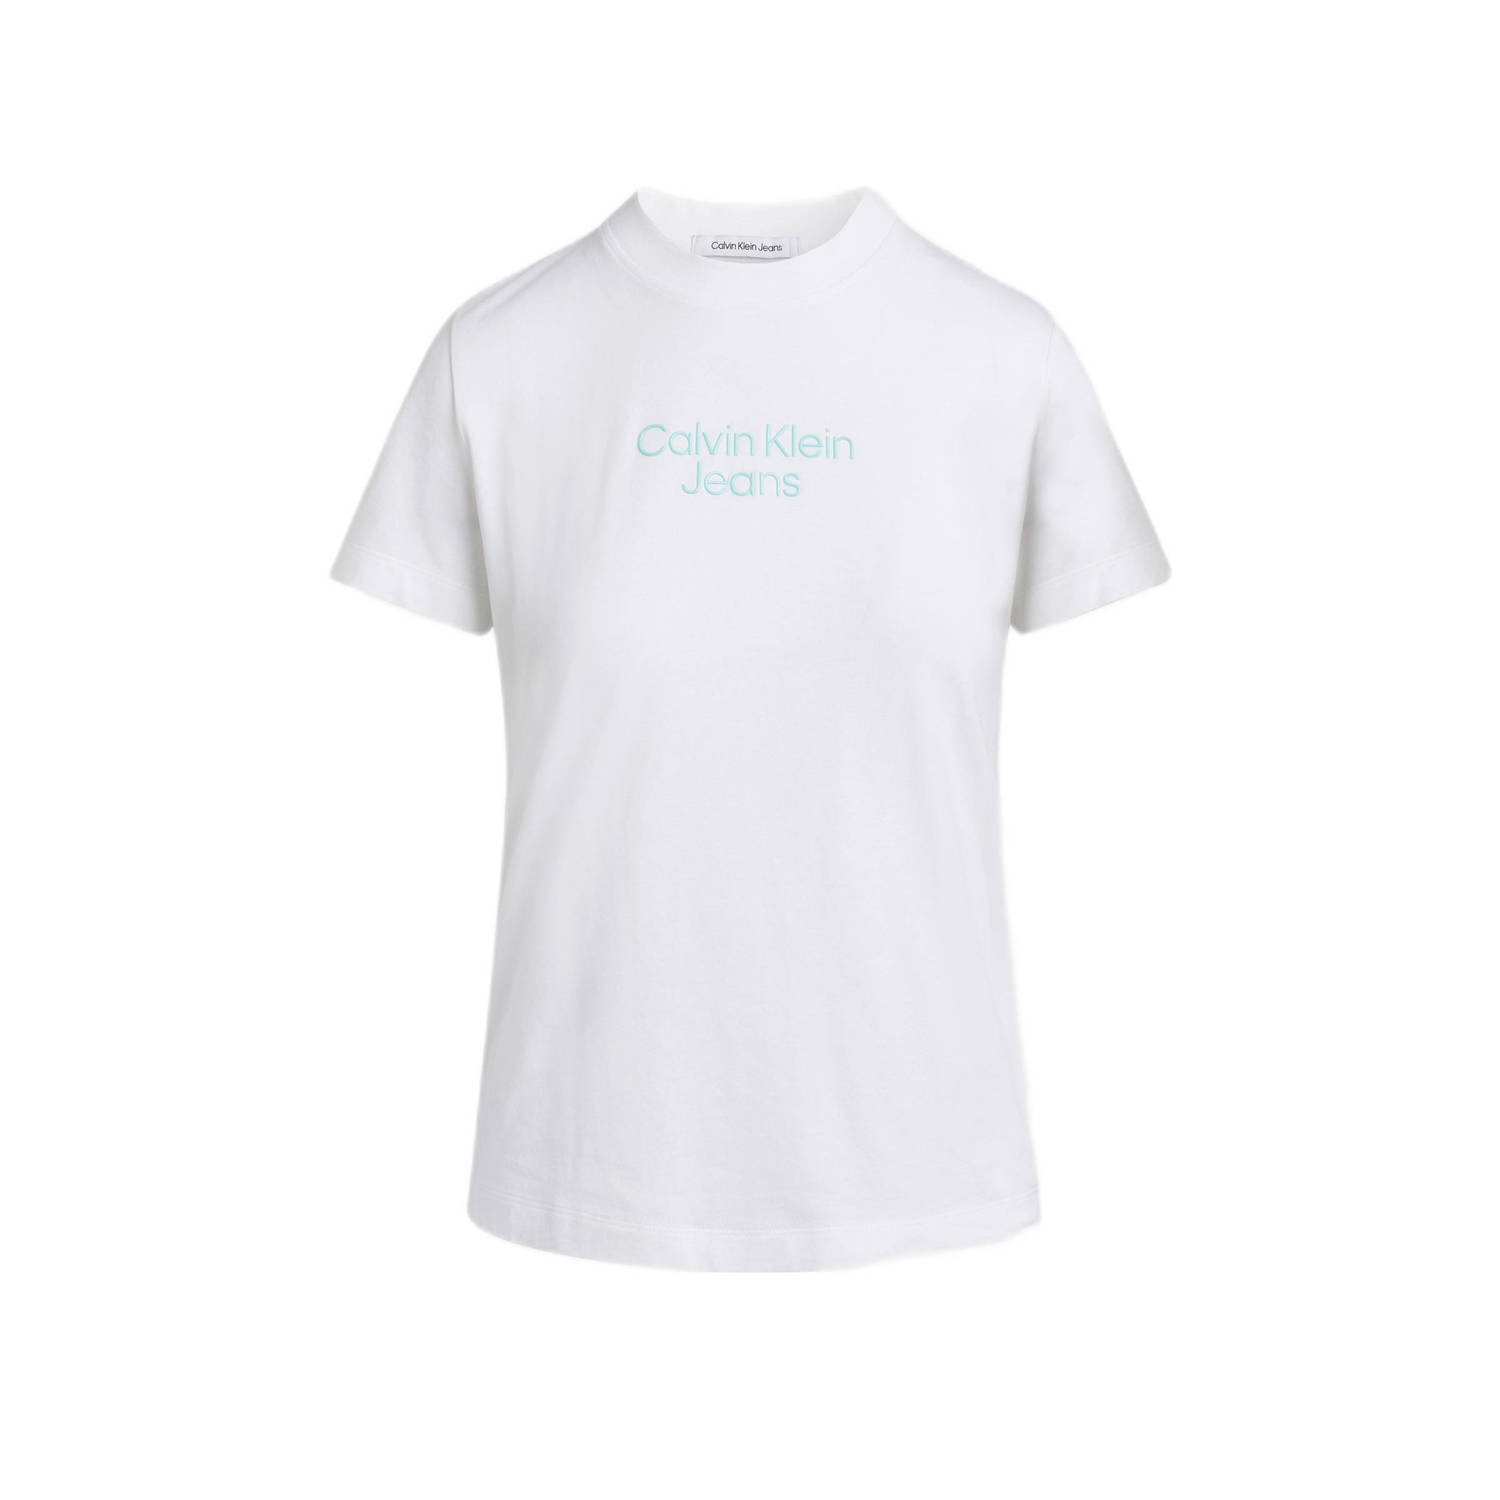 CALVIN KLEIN JEANS T-shirt met tekst wit